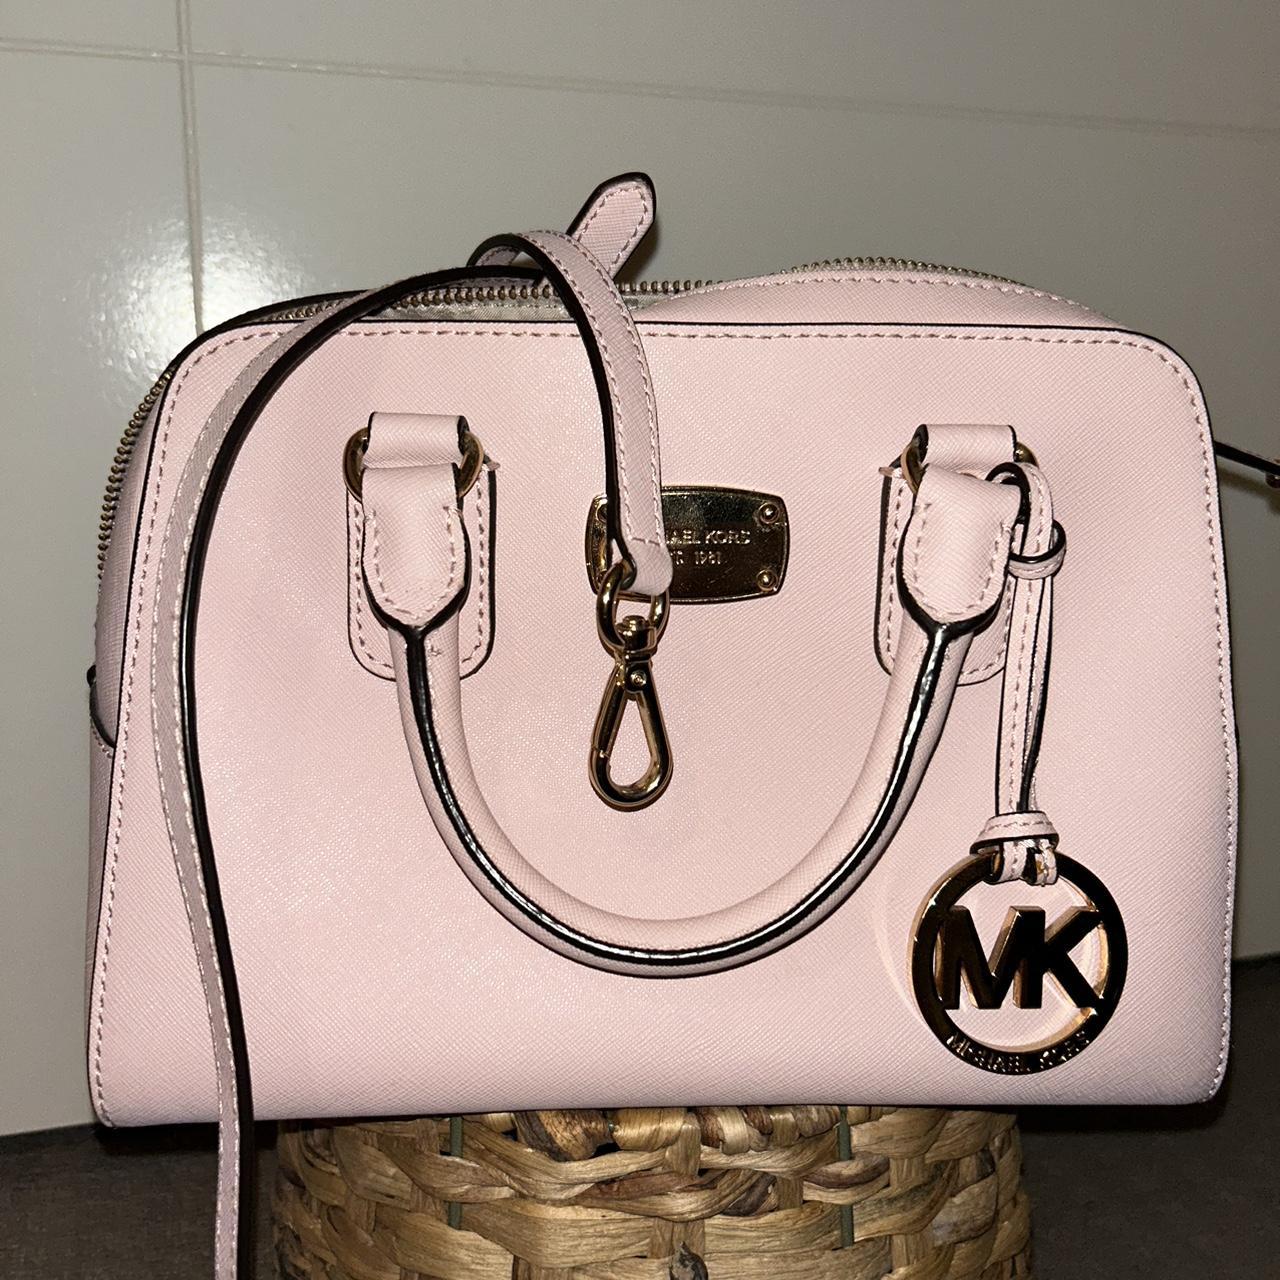 Michael Kors Jet Set Chain Zip Tote Pebble Leather Light Pink Phone Wallet  Set | eBay